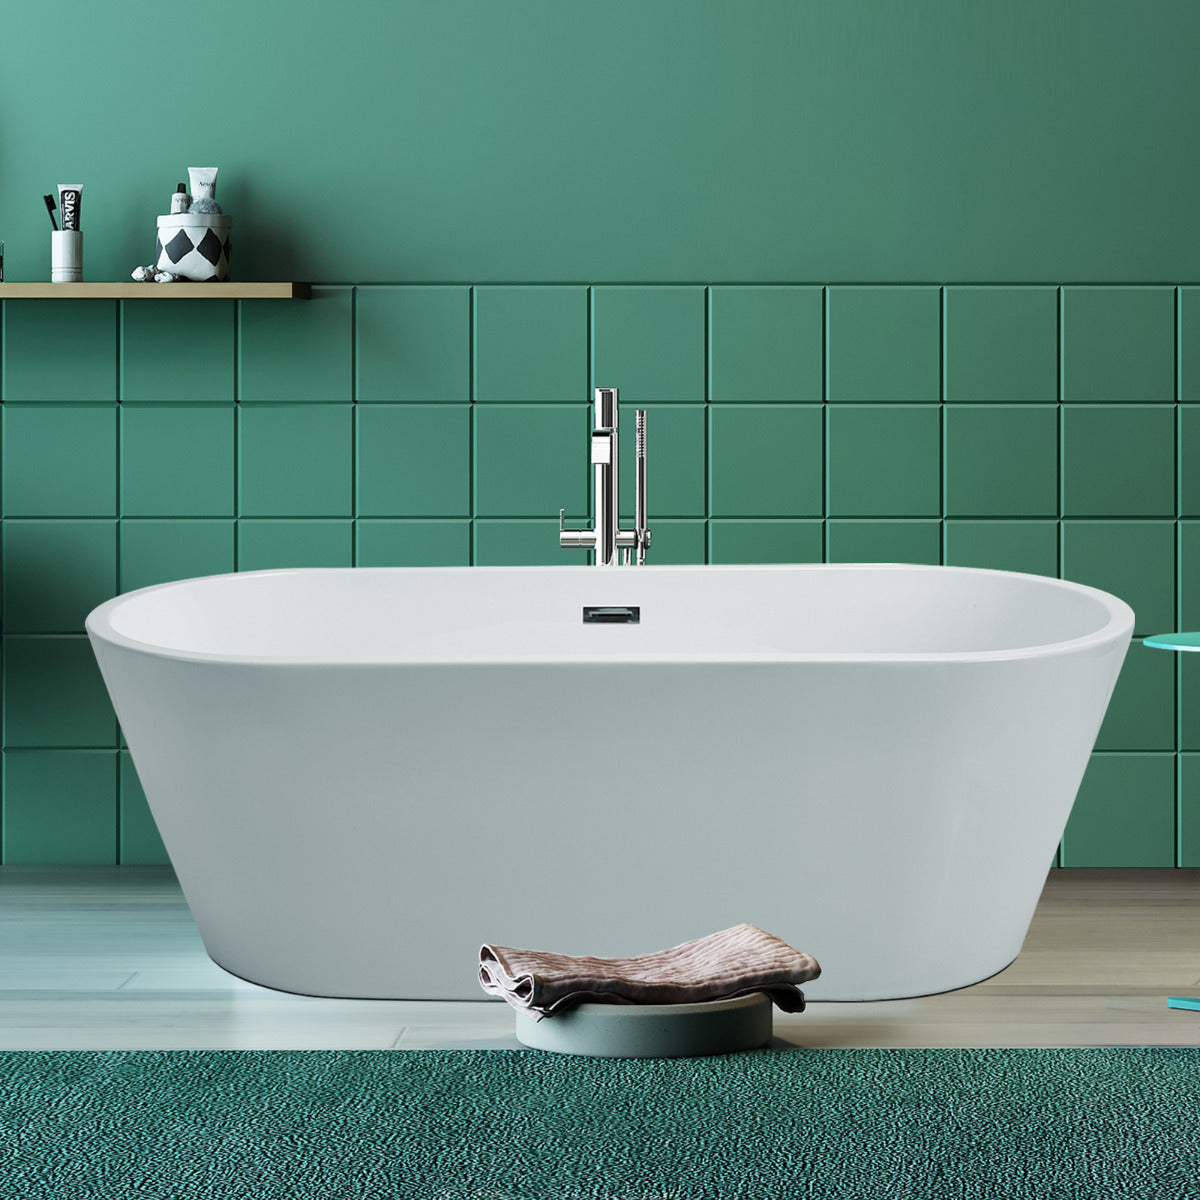 JassferryJASSFERRY Freestanding Bathtub Luxury Design Soaking Baths Acrylic ModernBathtubs